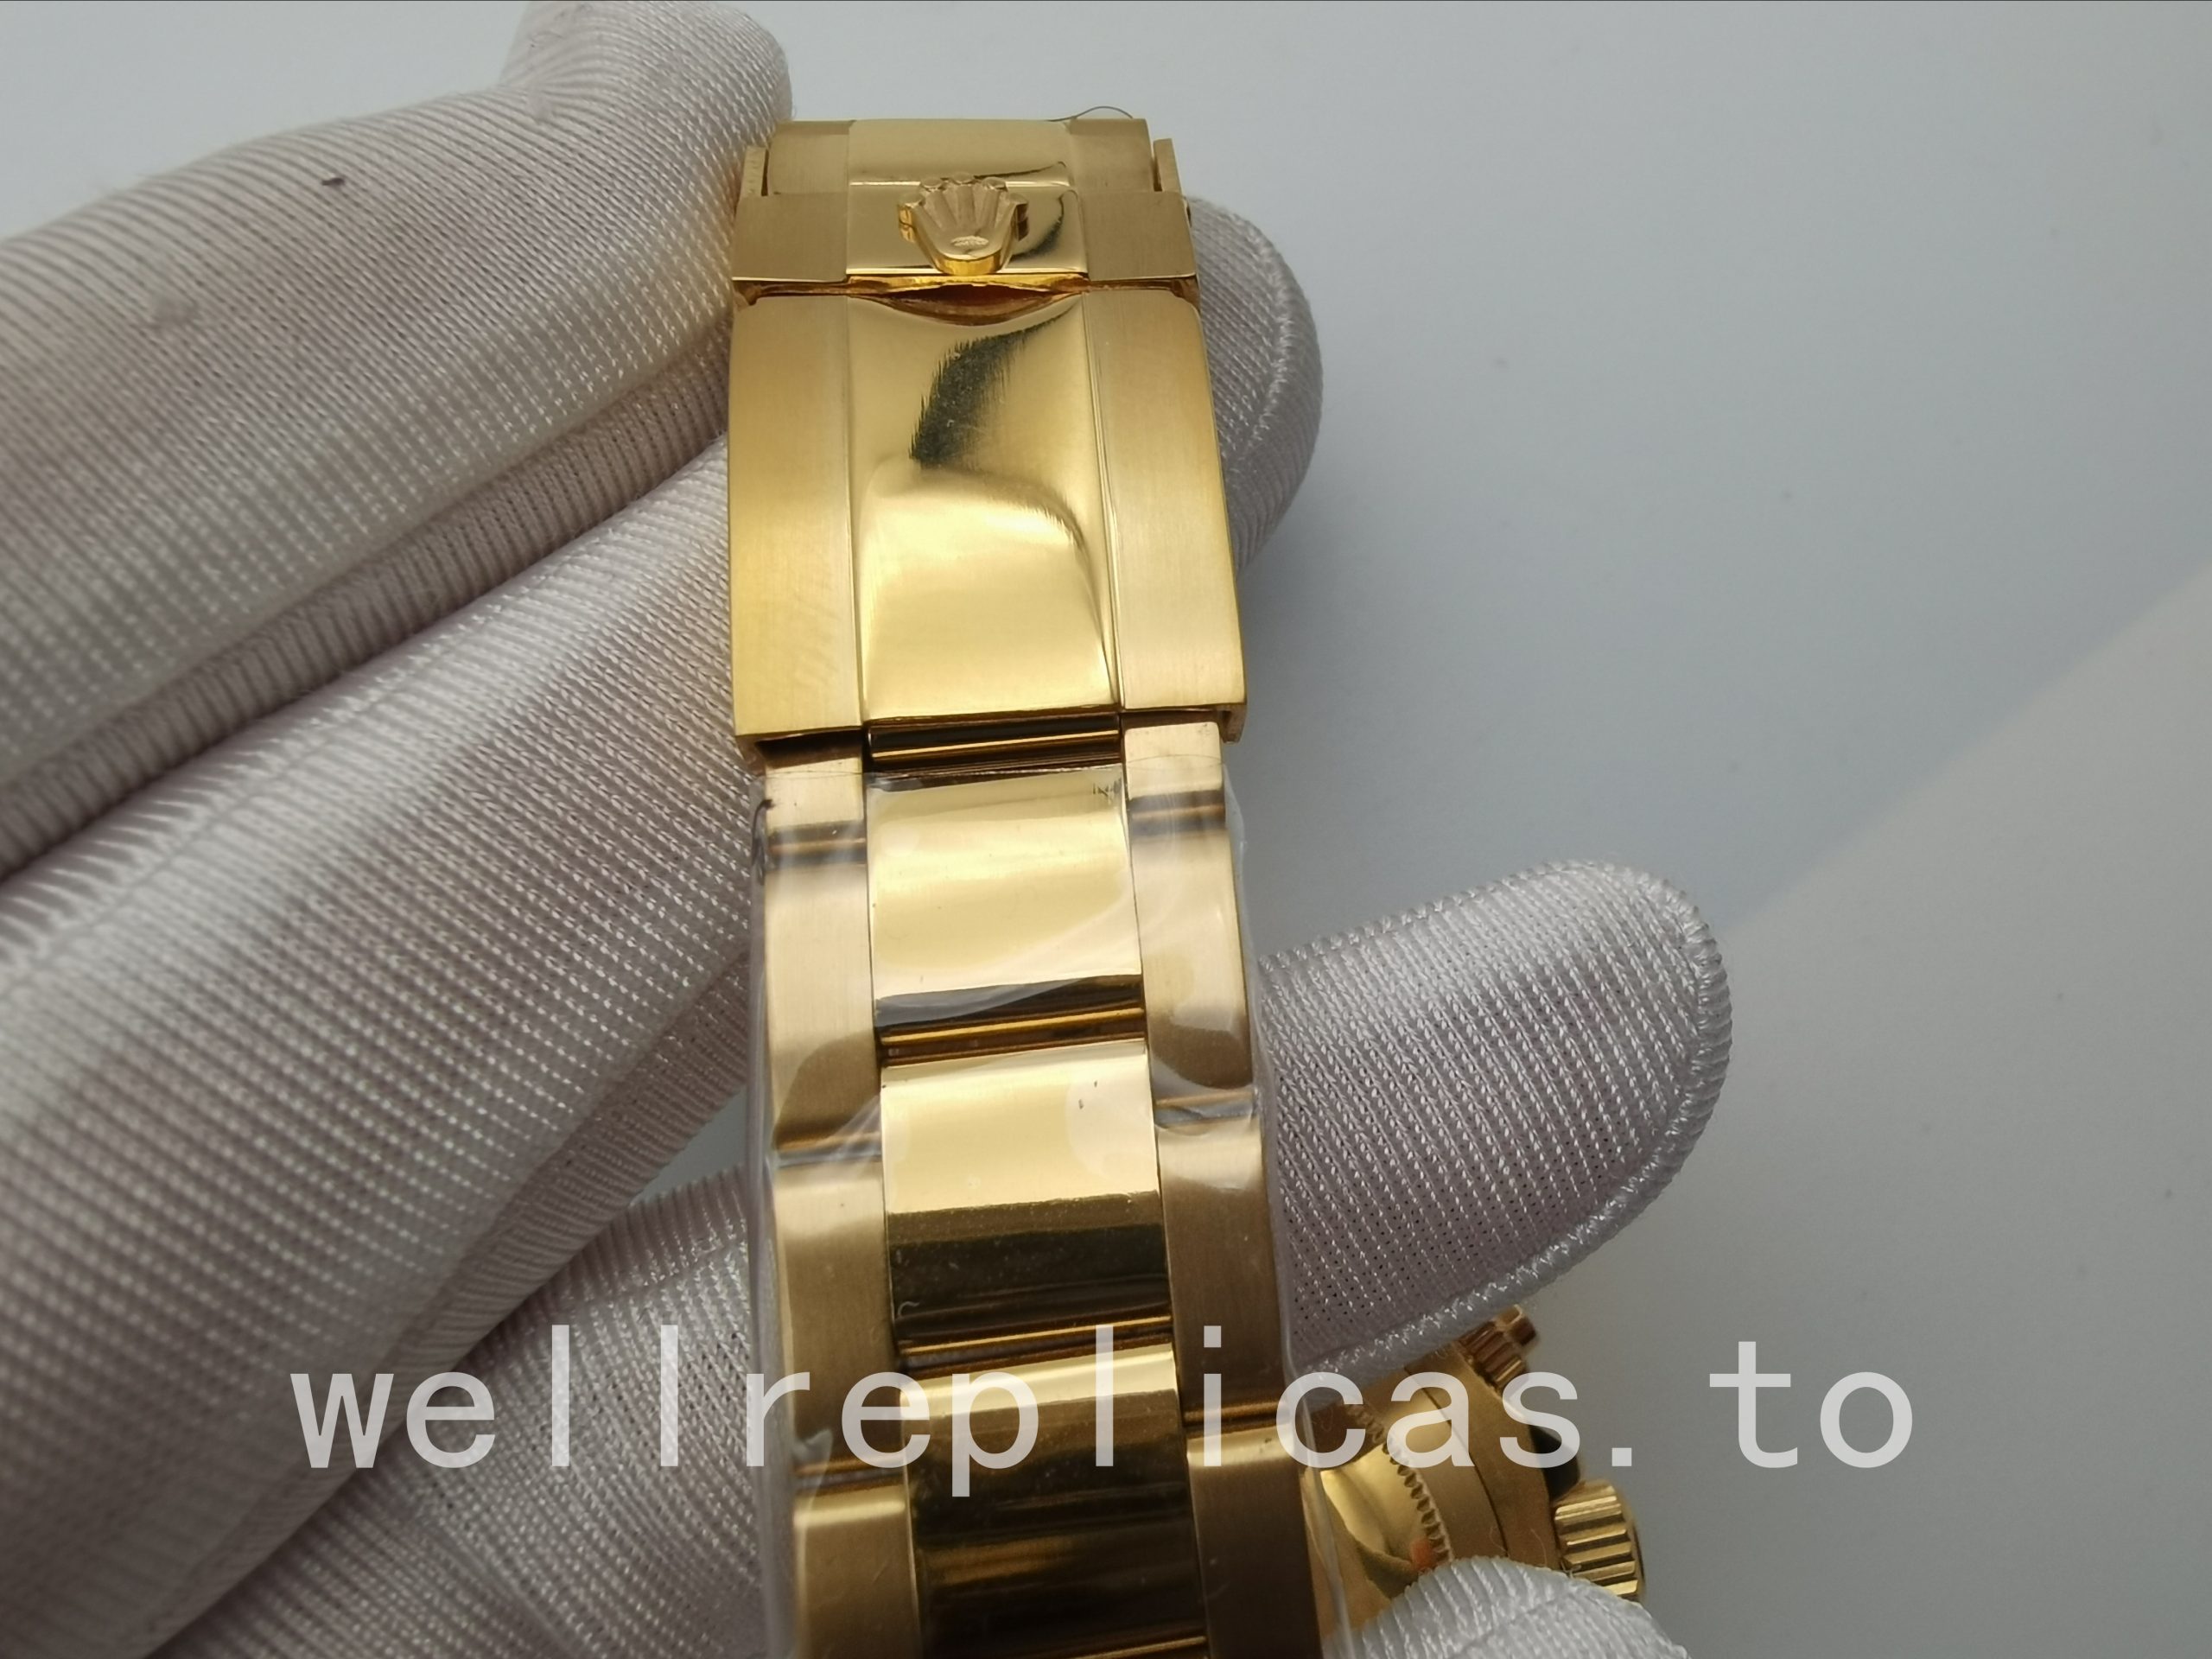 Automation replica rolex diamond watches Carrera Ladies - Wellreplicas ...